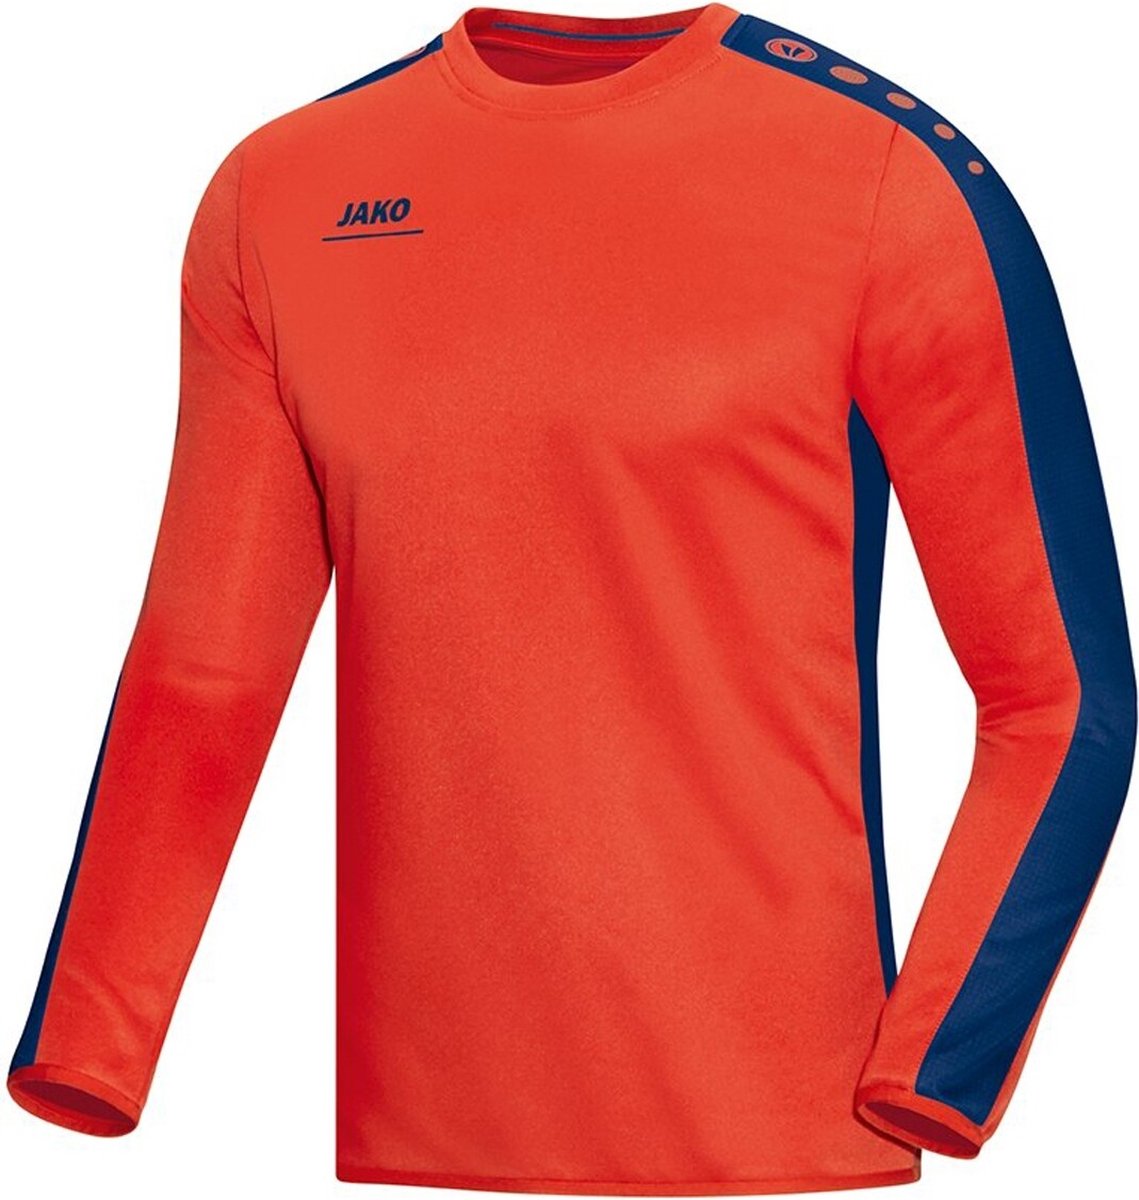 Jako - Sweater Striker Junior - Sweater Junior Oranje - 128 - flame/nachtblauw